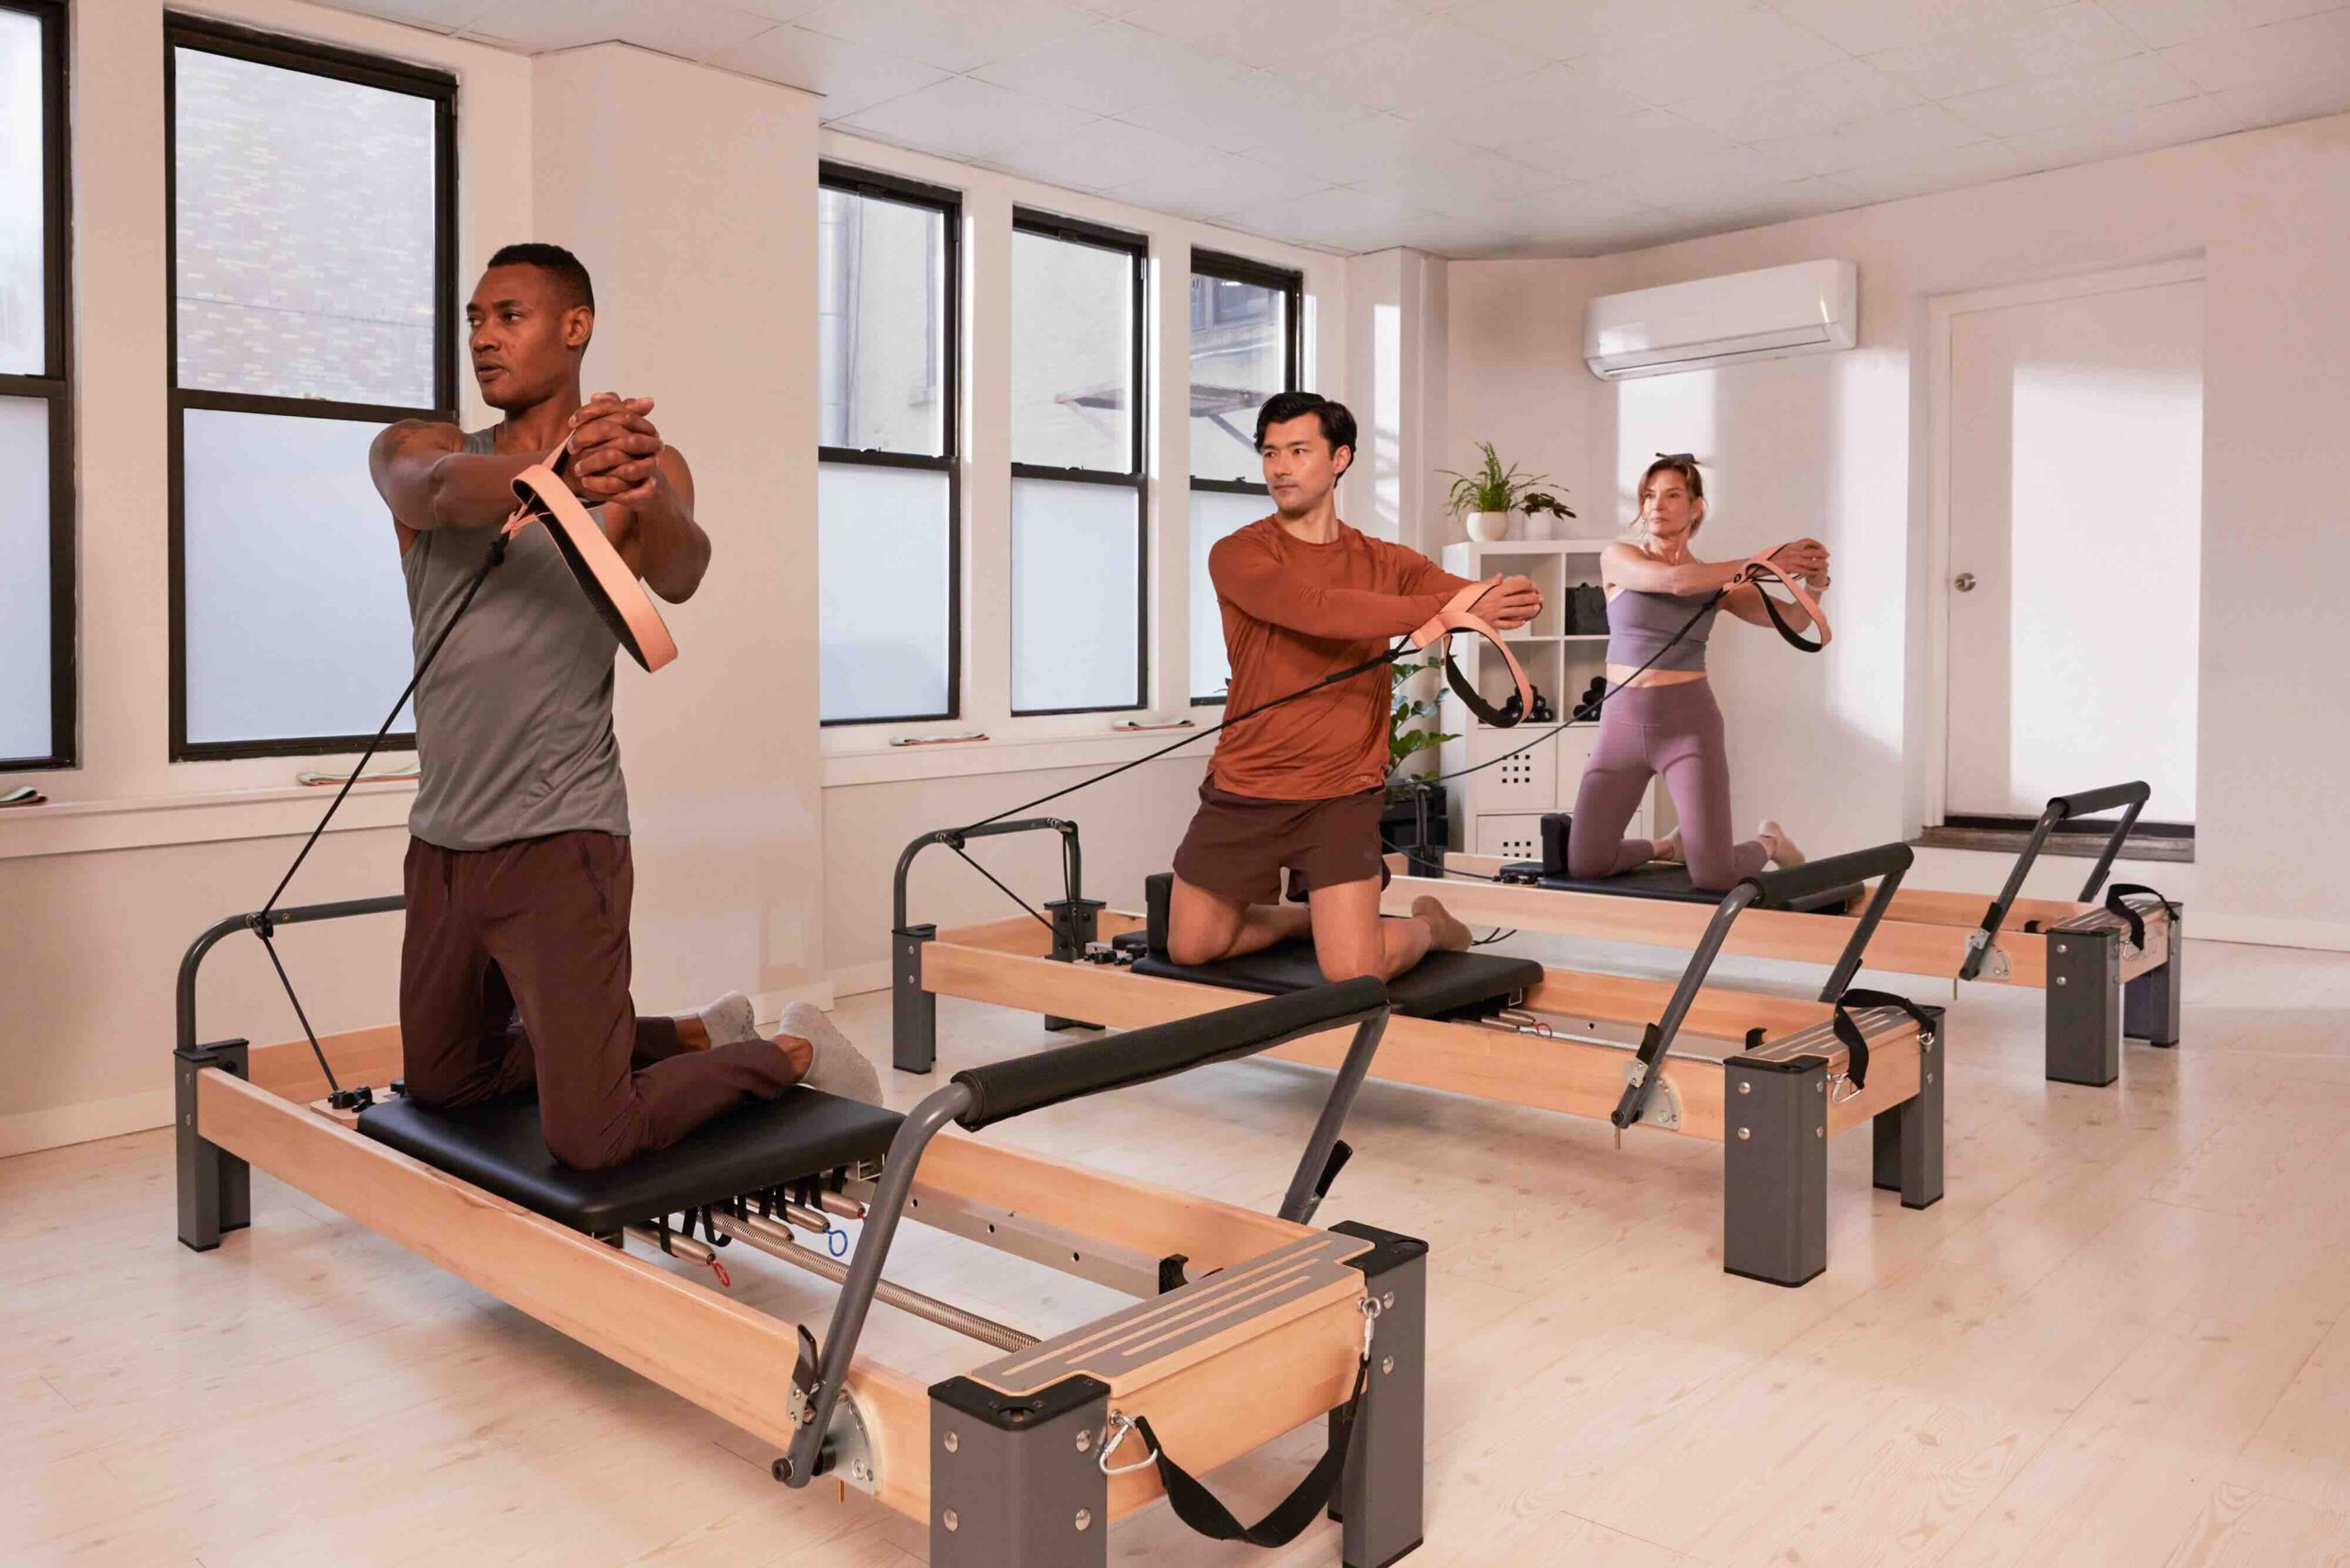 Full Length Pilates Mat Class  Pilates Workout at Home with NO